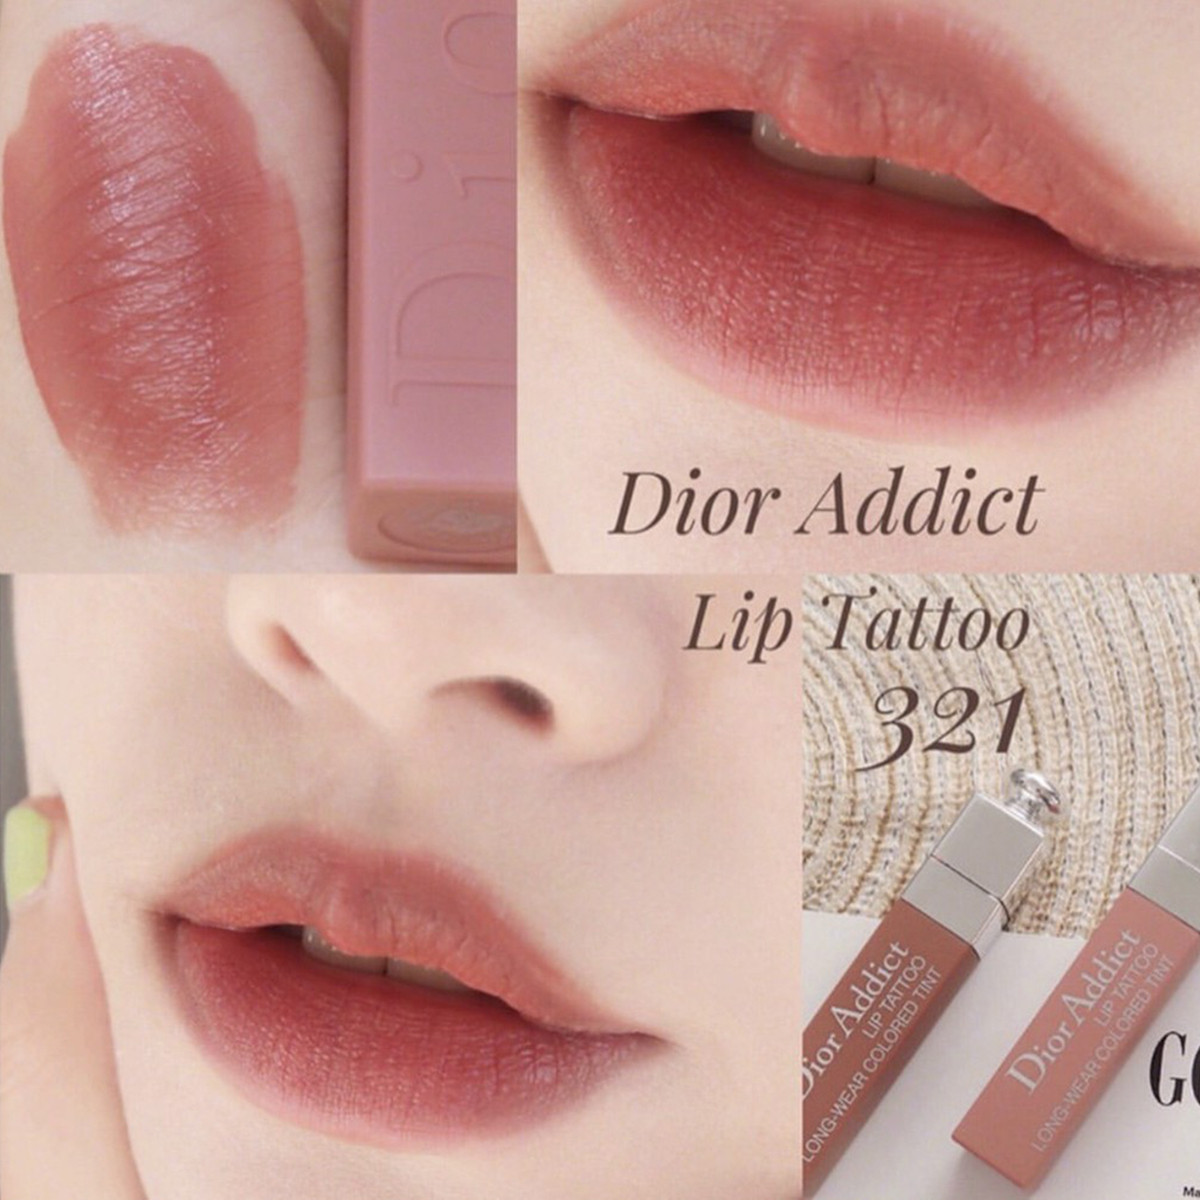 Dior Addict Lip Tints swatches on NW13 skin  rswatchitforme